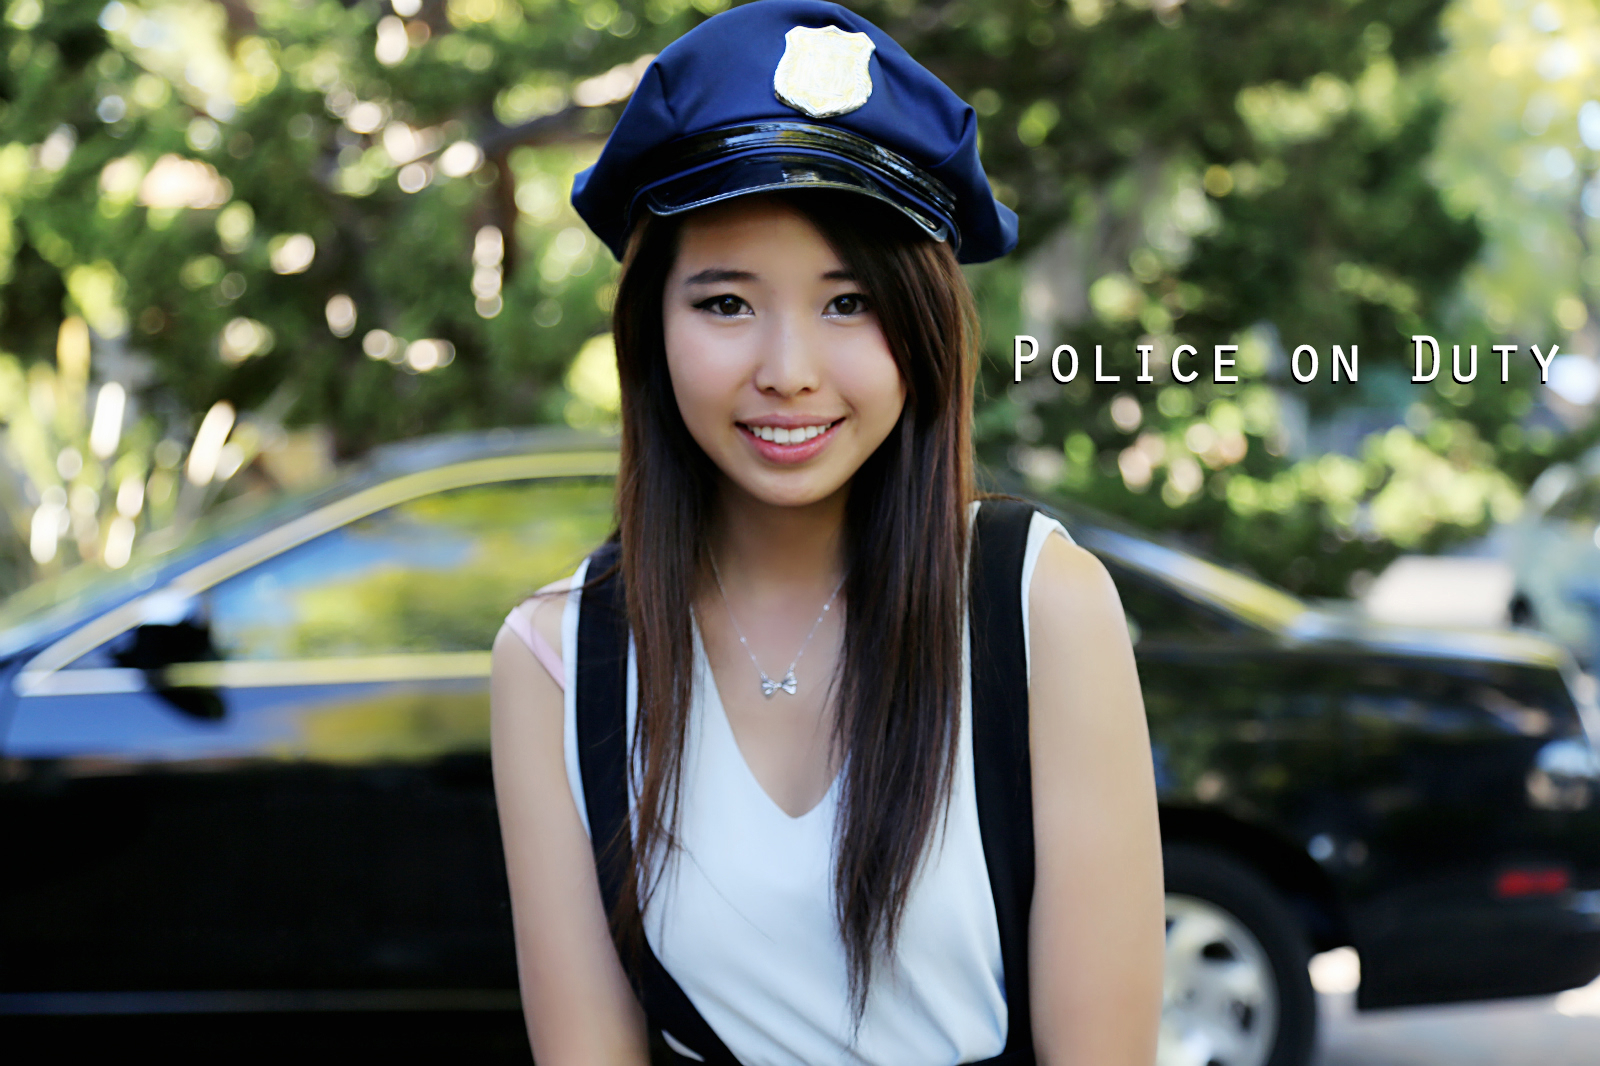 diy police woman costume